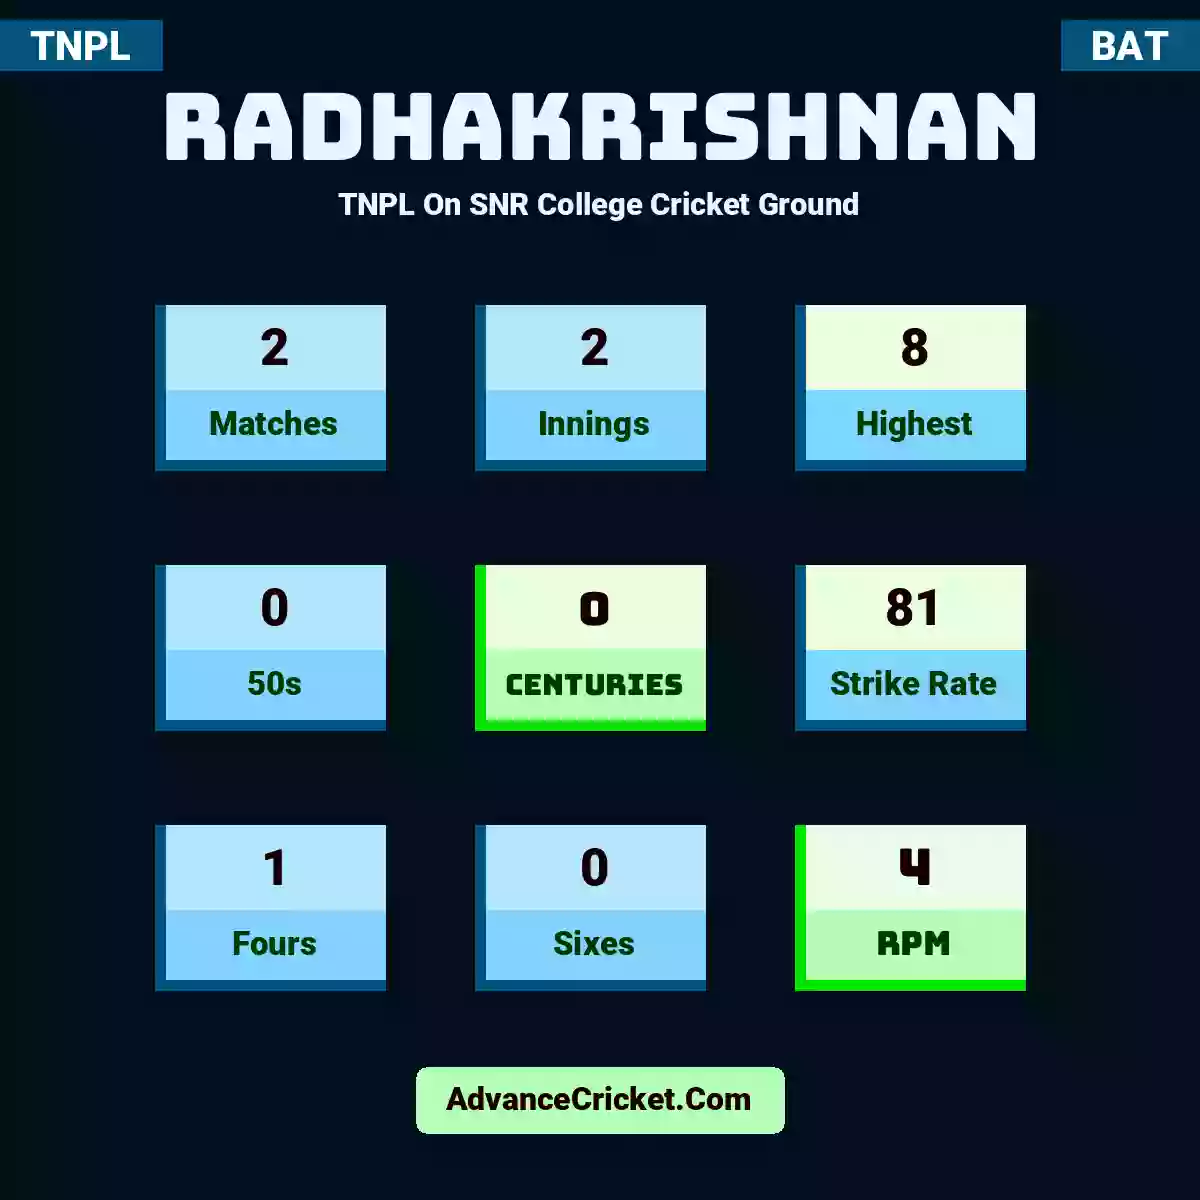 Radhakrishnan TNPL  On SNR College Cricket Ground, Radhakrishnan played 2 matches, scored 8 runs as highest, 0 half-centuries, and 0 centuries, with a strike rate of 81. Radhakrishnan hit 1 fours and 0 sixes, with an RPM of 4.